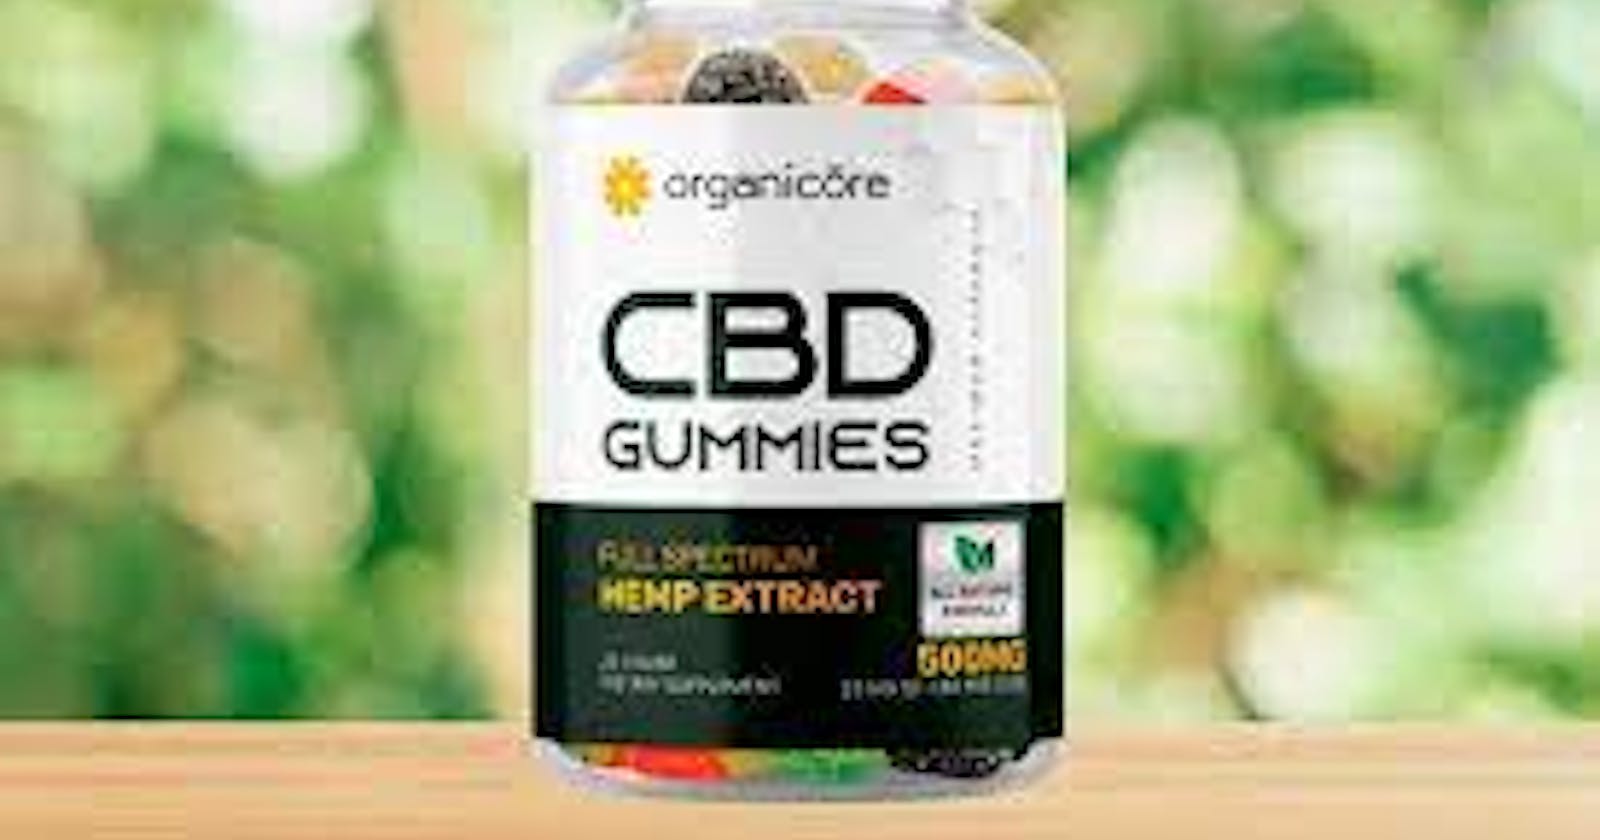 Organicore CBD Gummies US Official